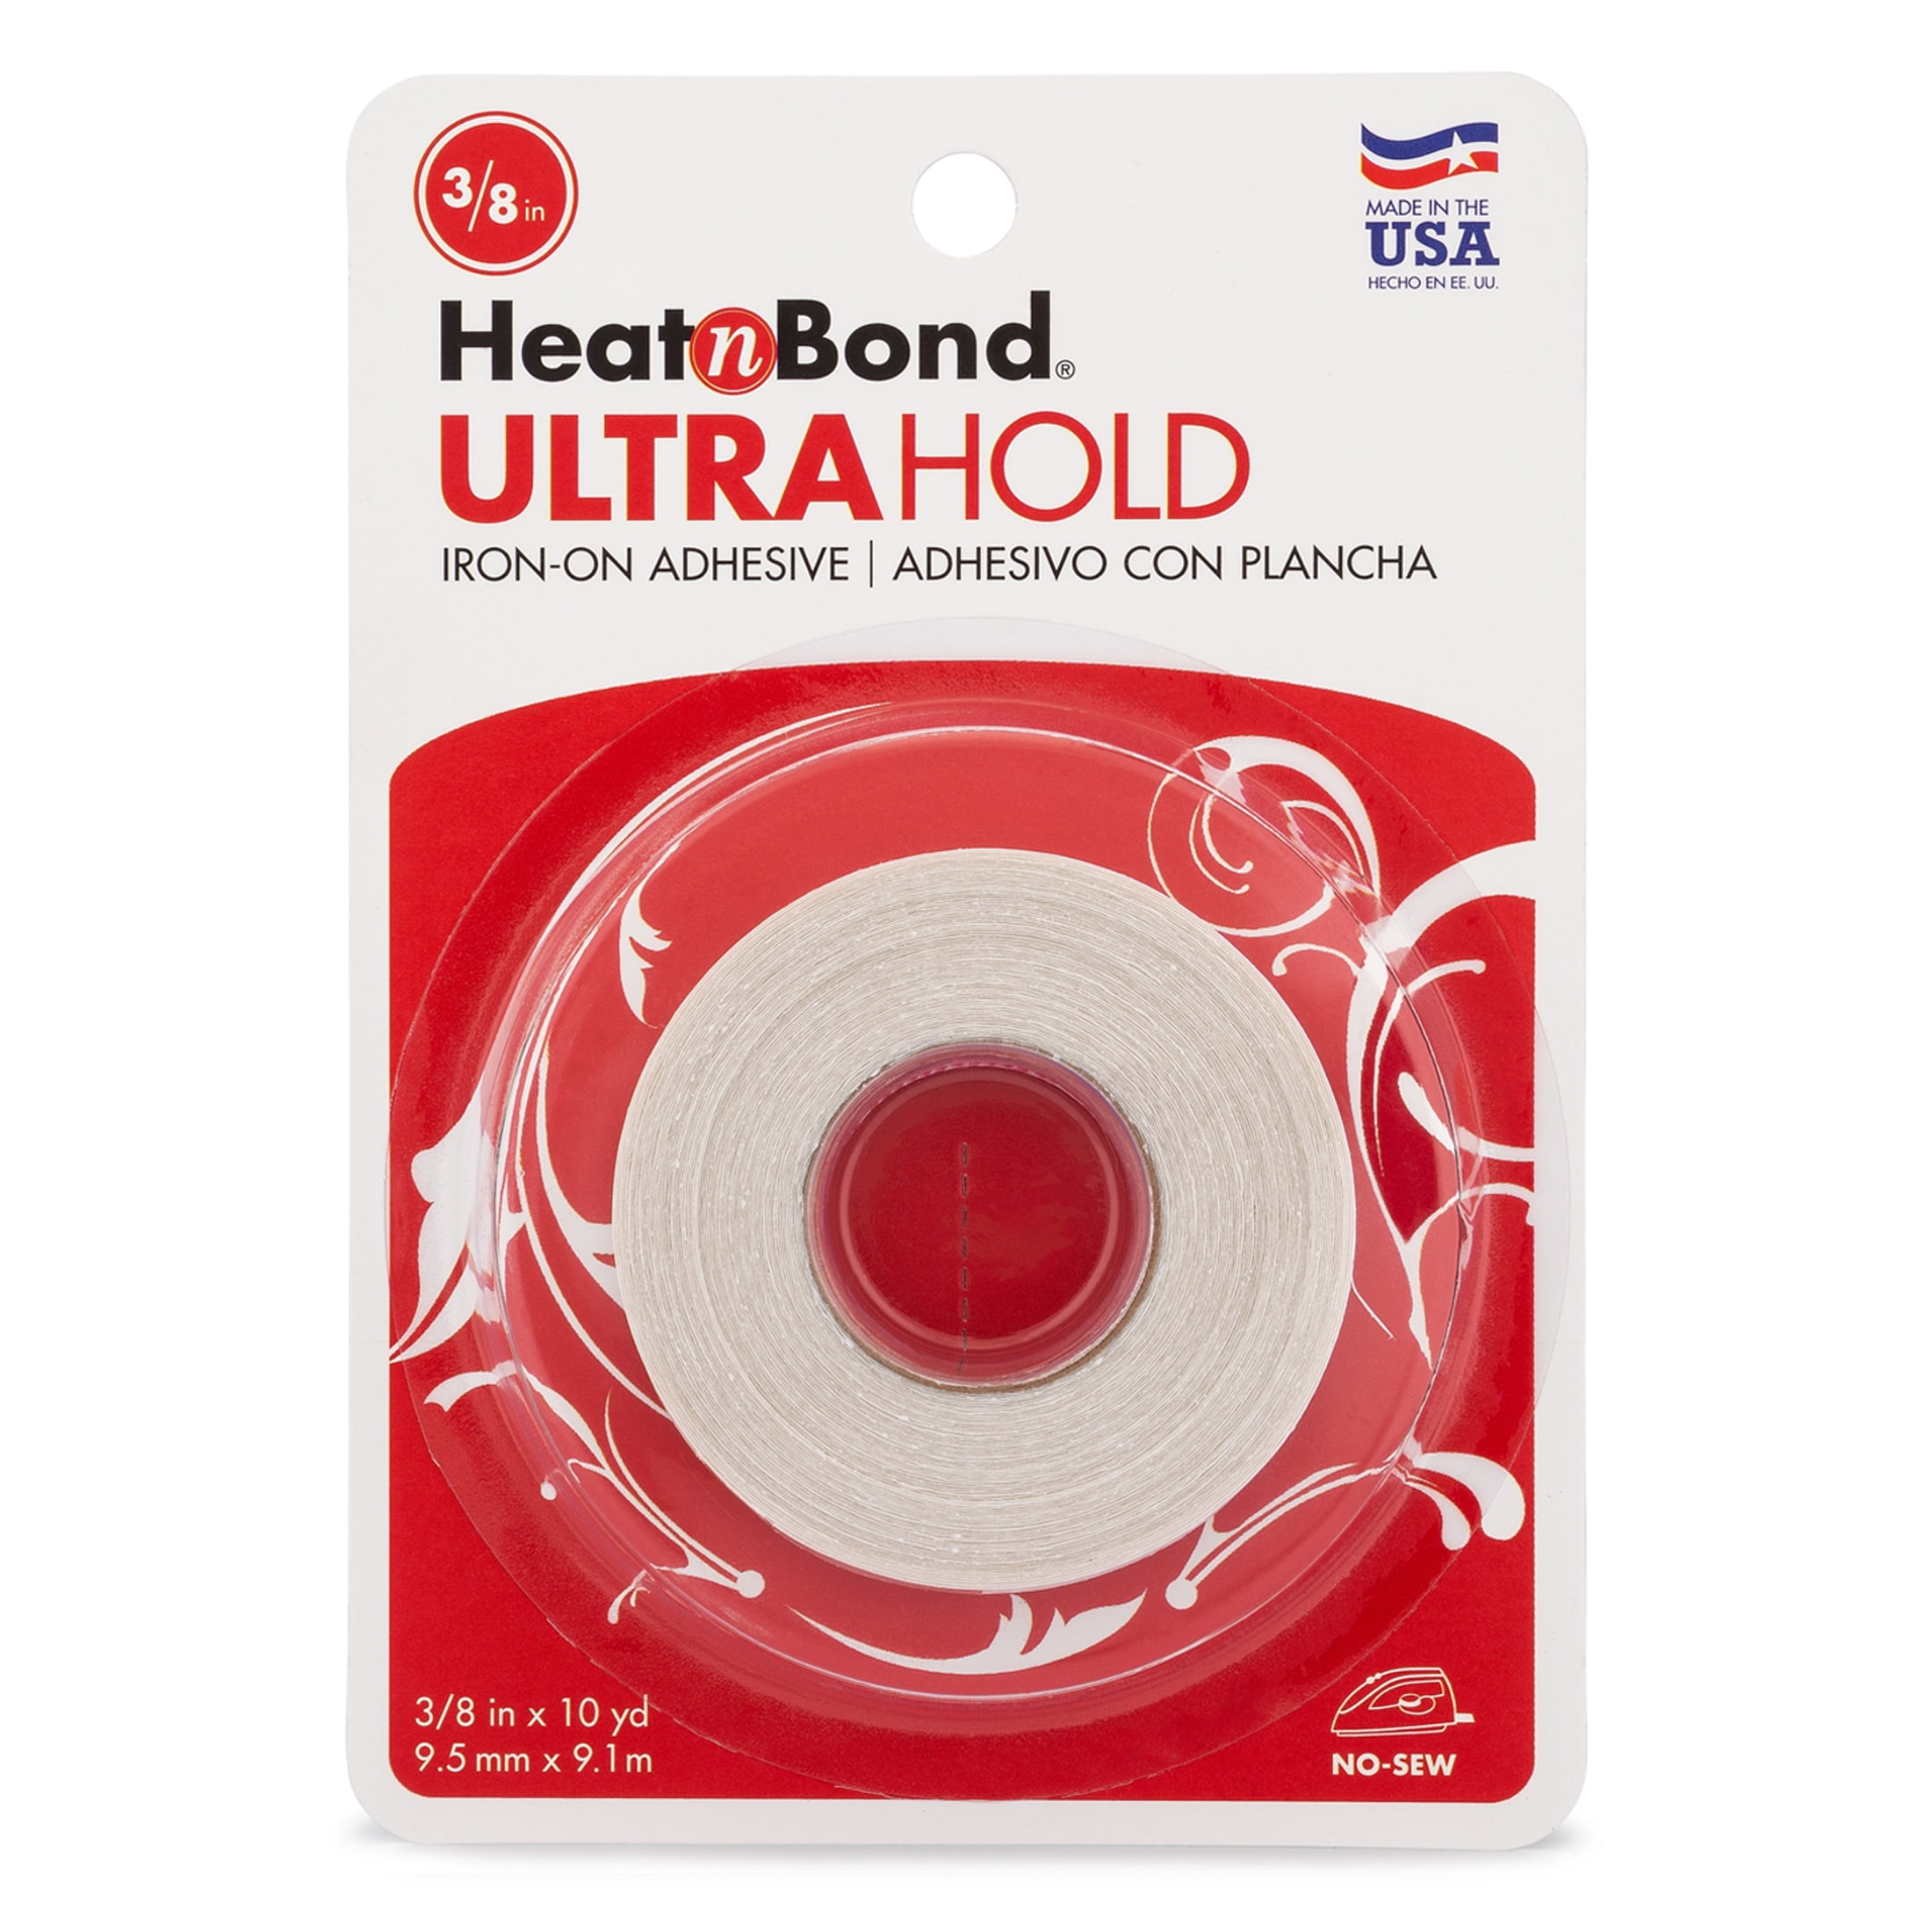 HeatnBond Ultrahold Iron-On Adhesive Tape, 3/8 inch x 10 Yards, White